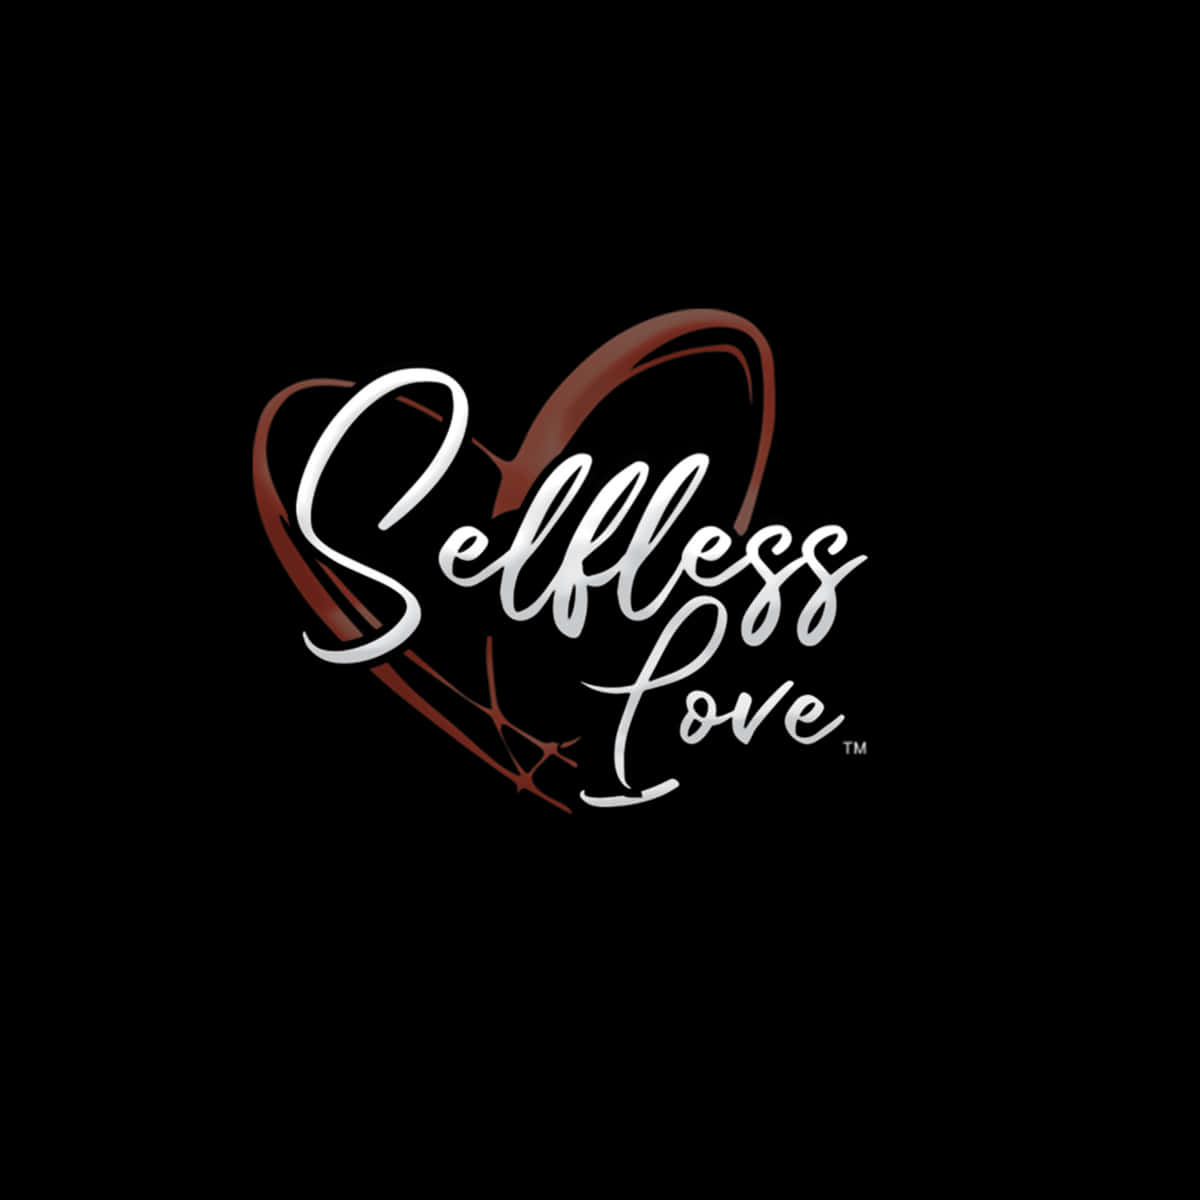 Selfless Love In Cursive Font Wallpaper